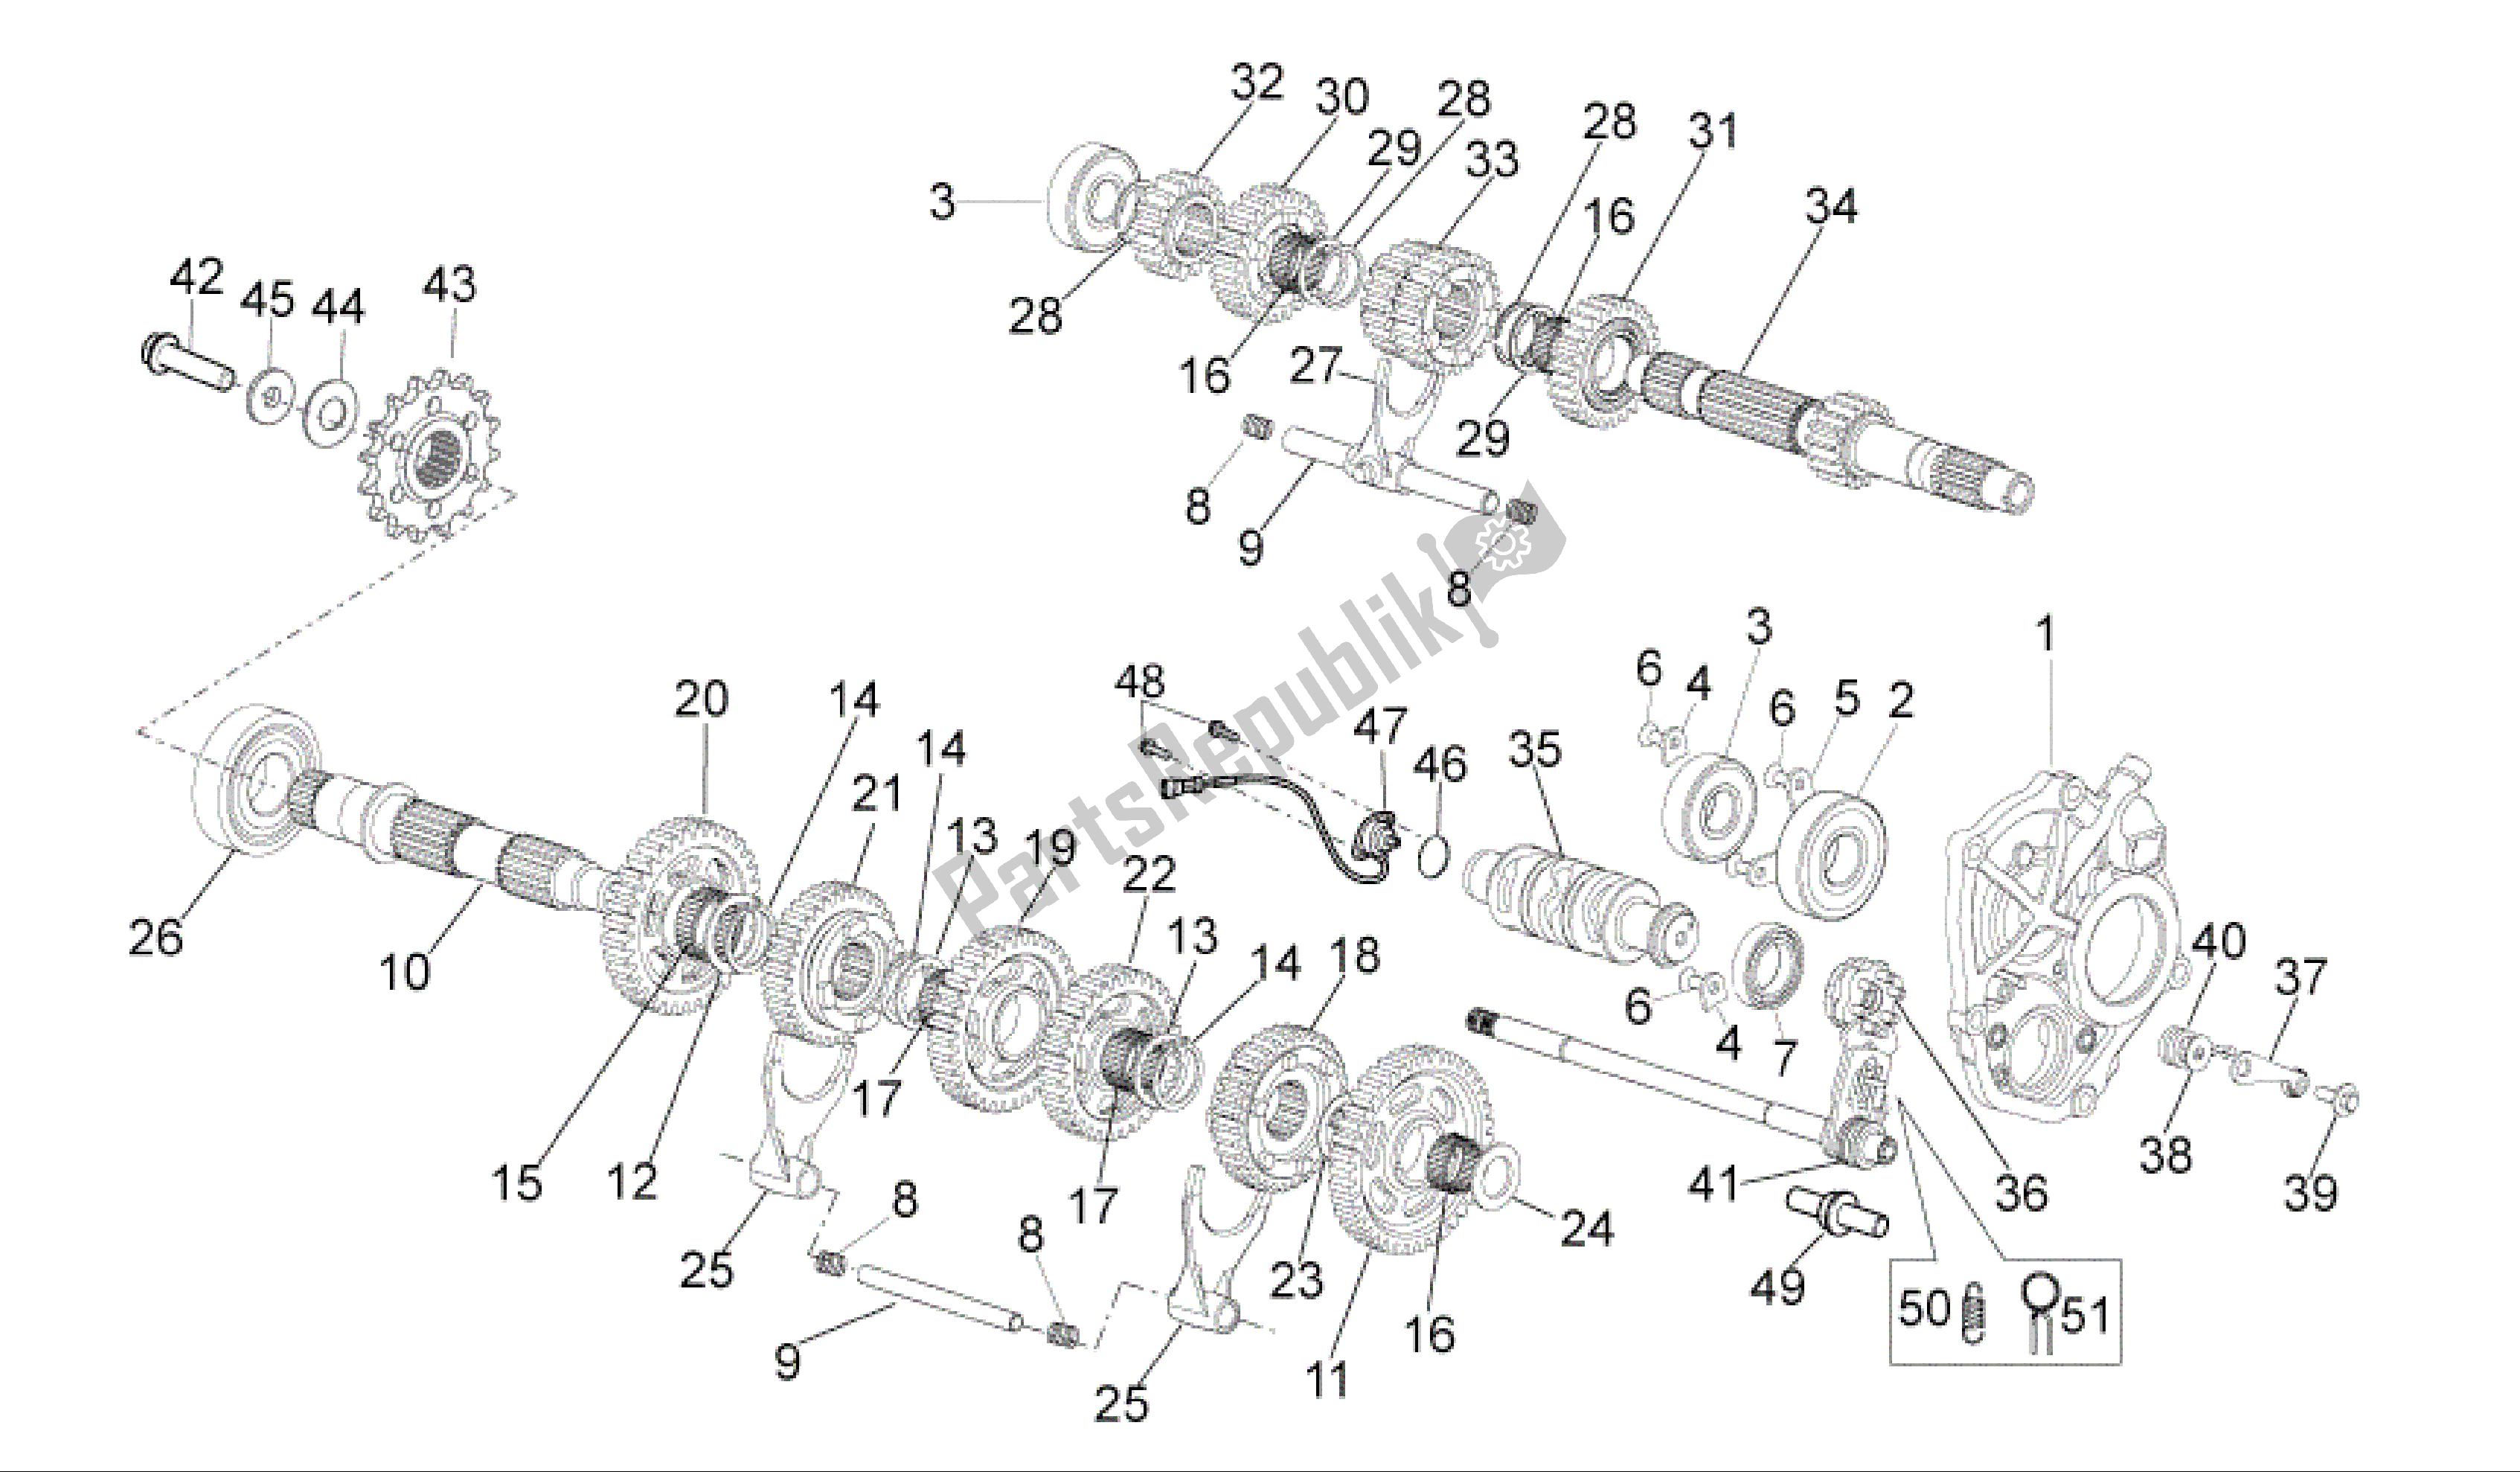 All parts for the Gear Box of the Aprilia RSV4 R 3980 1000 2009 - 2010